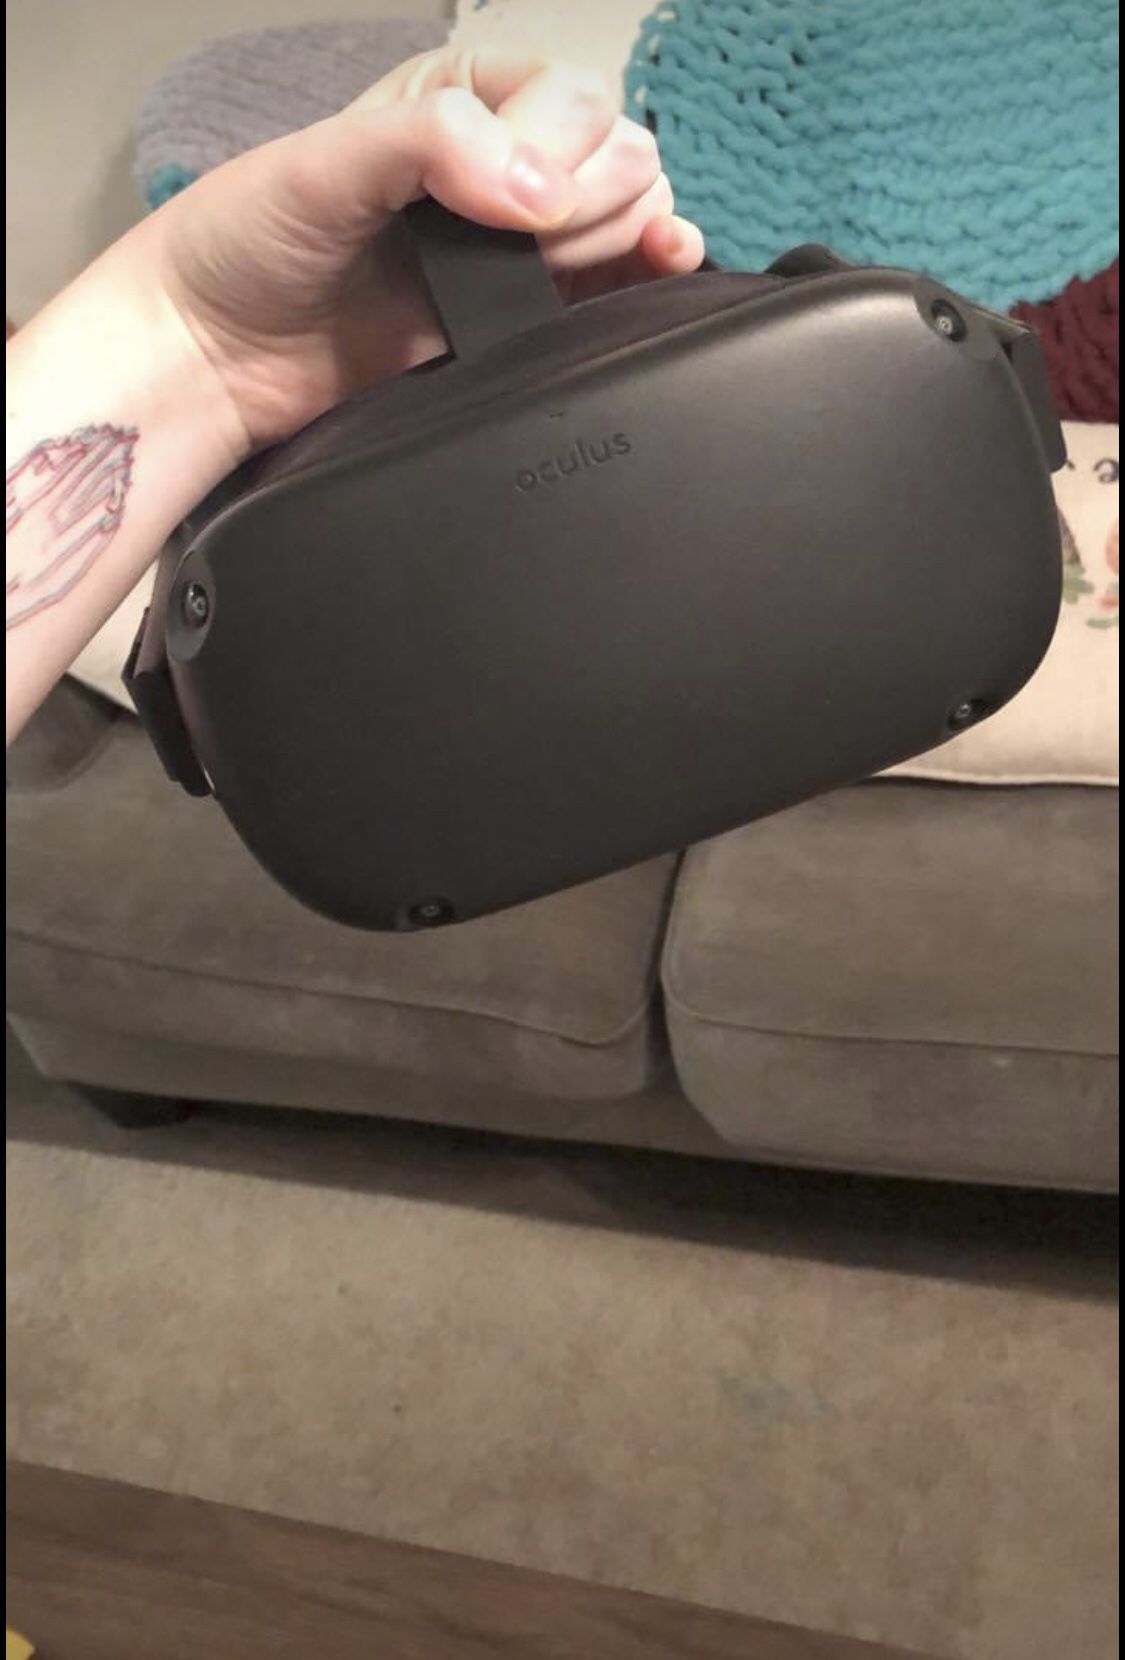 Oculus Quest VR Head Set